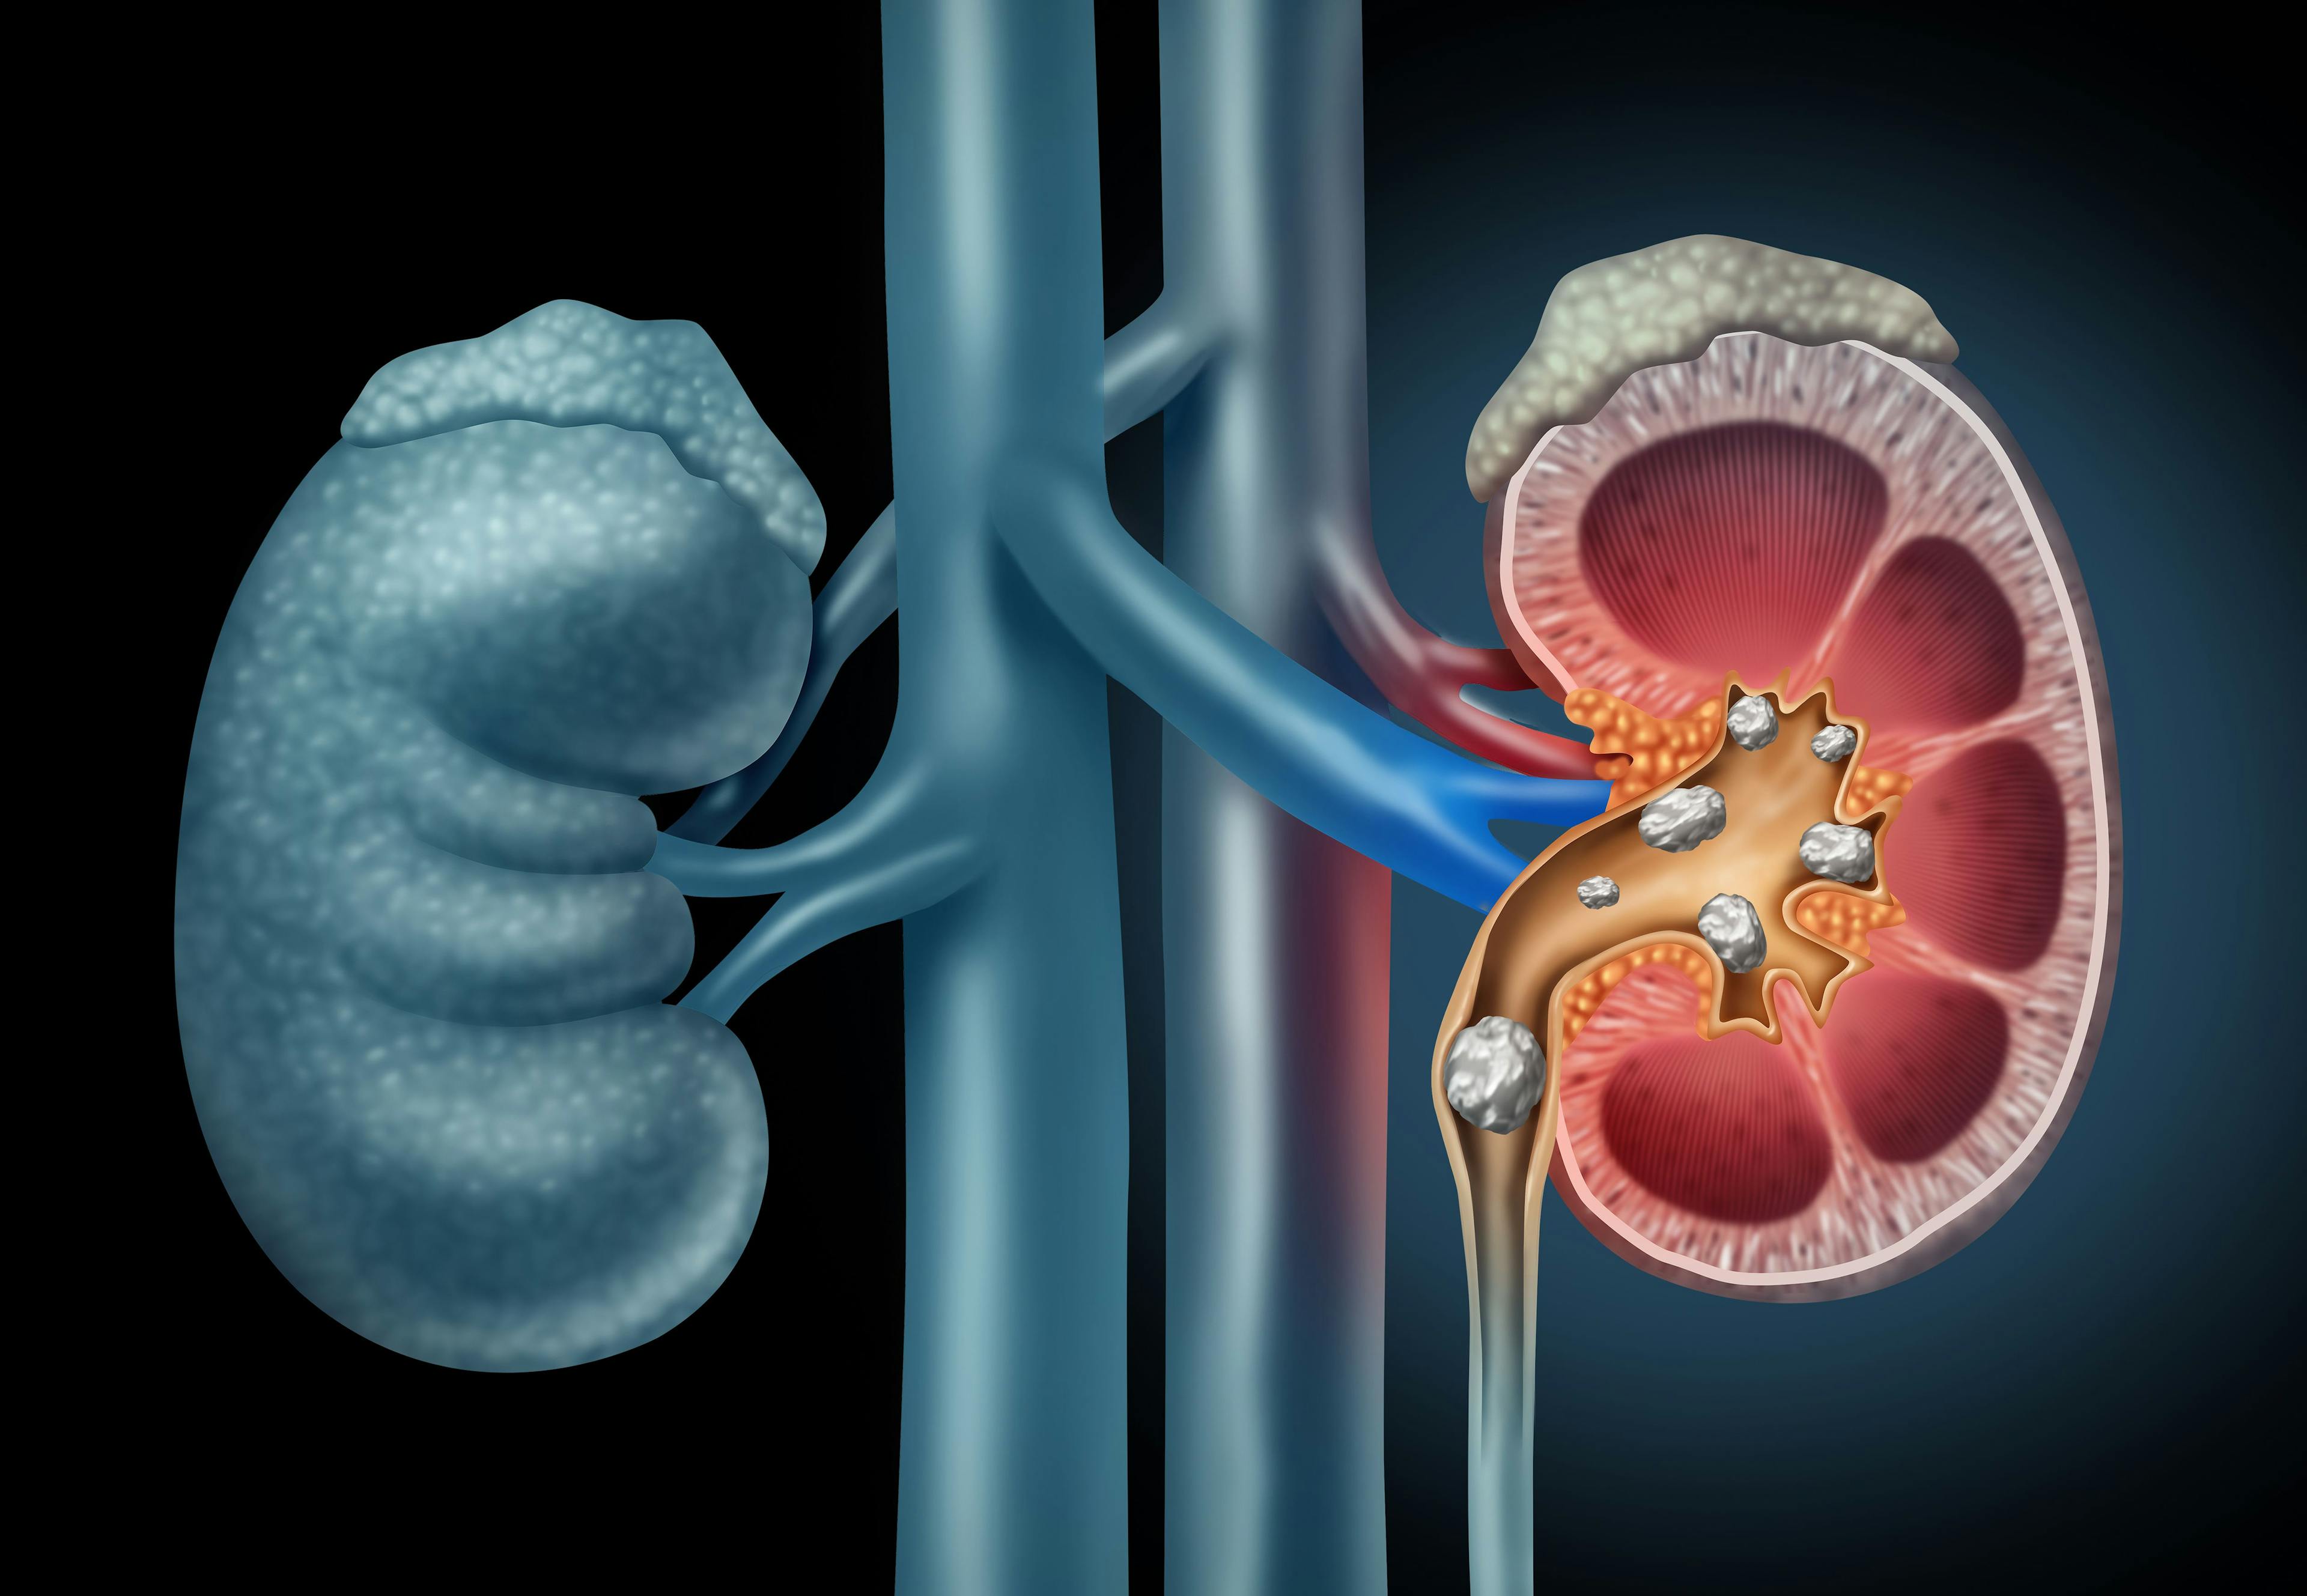 Human kidney Stones Medical Concept | Image Credit: © freshidea - stock.adobe.com